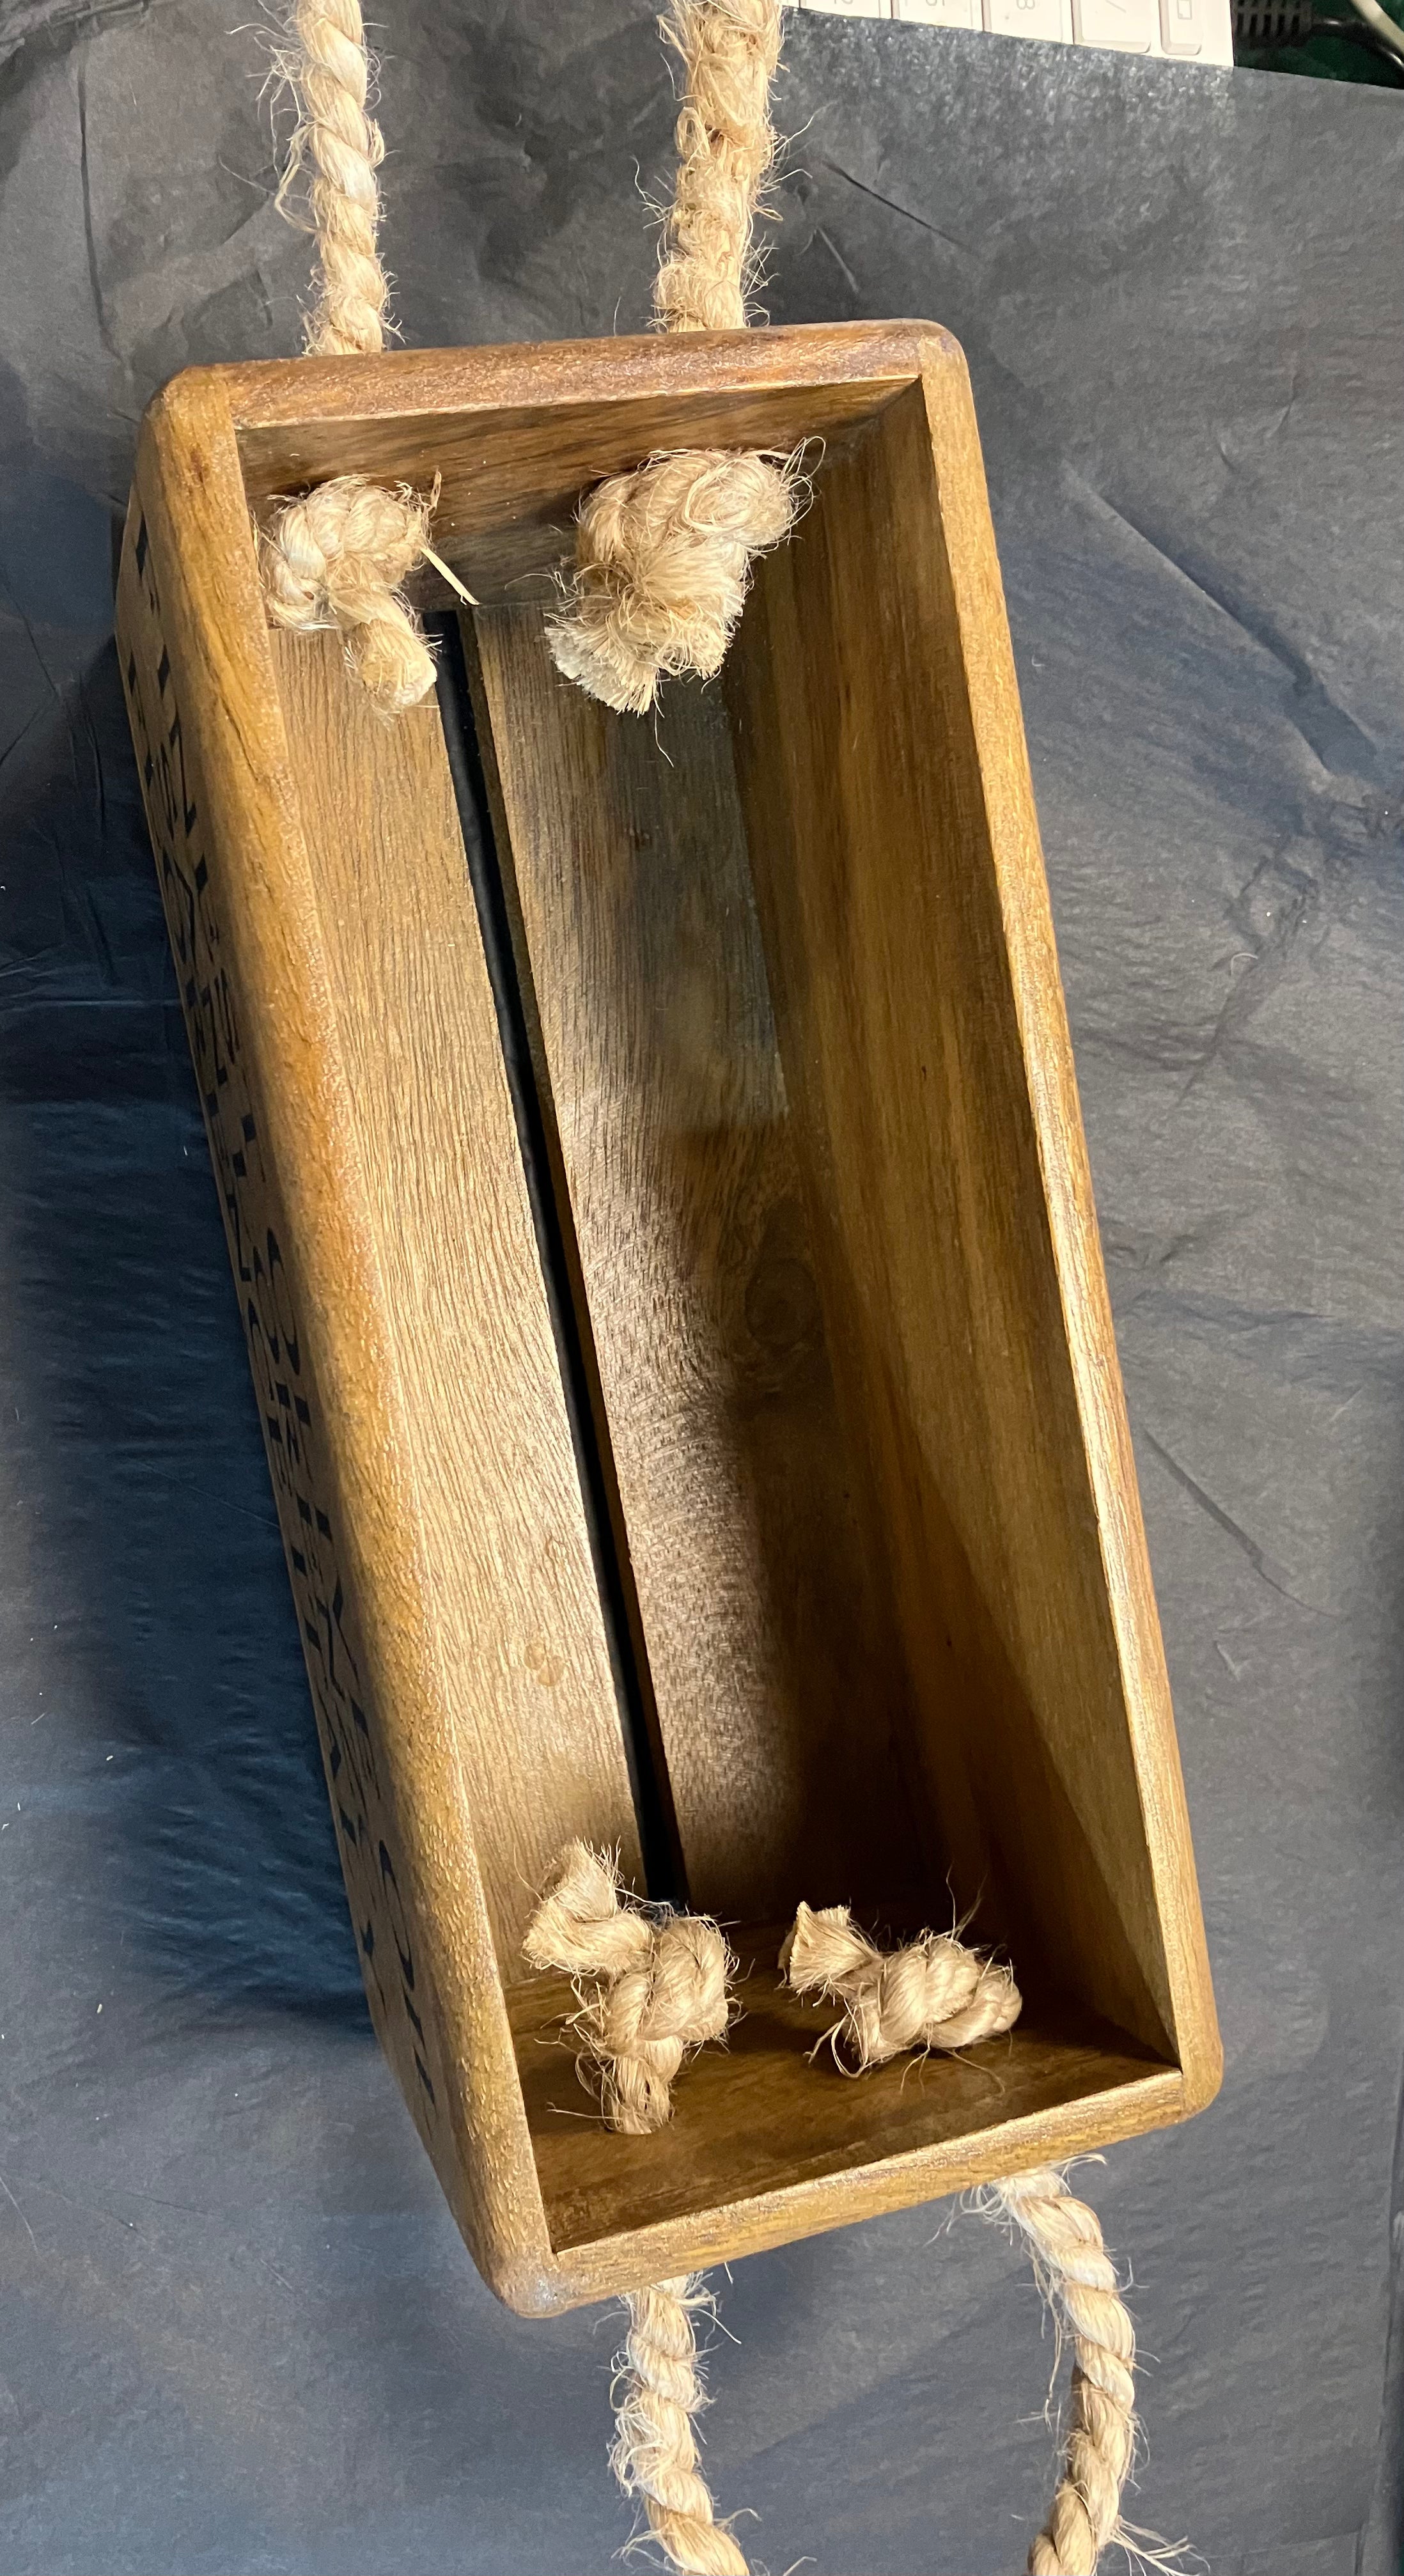 Bombay Sapphire wooden storage box - SALE